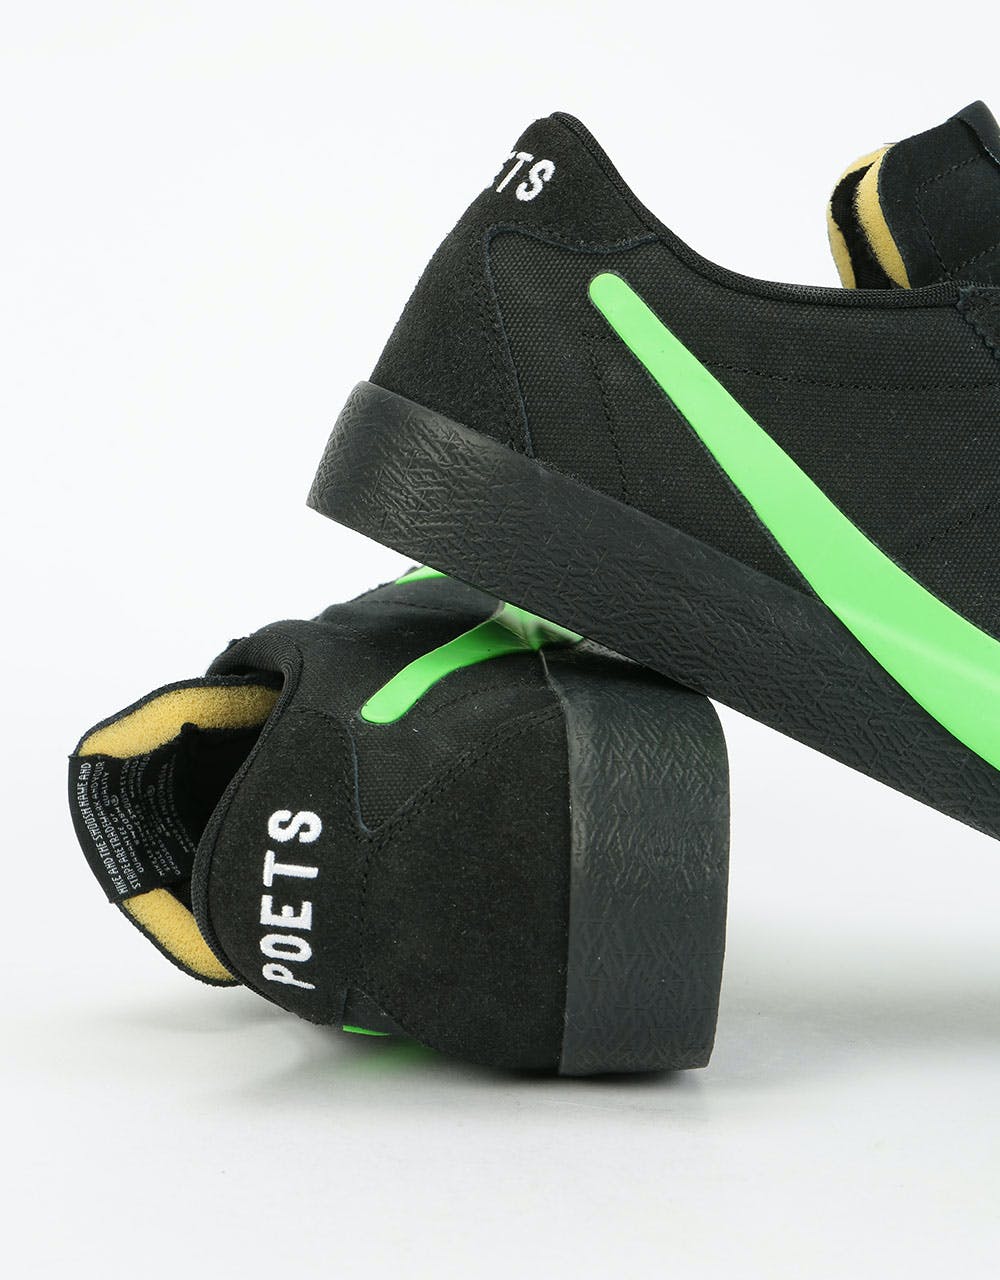 Nike SB x Poets Zoom Bruin QS Skate Shoes - Black/Voltage Green-White